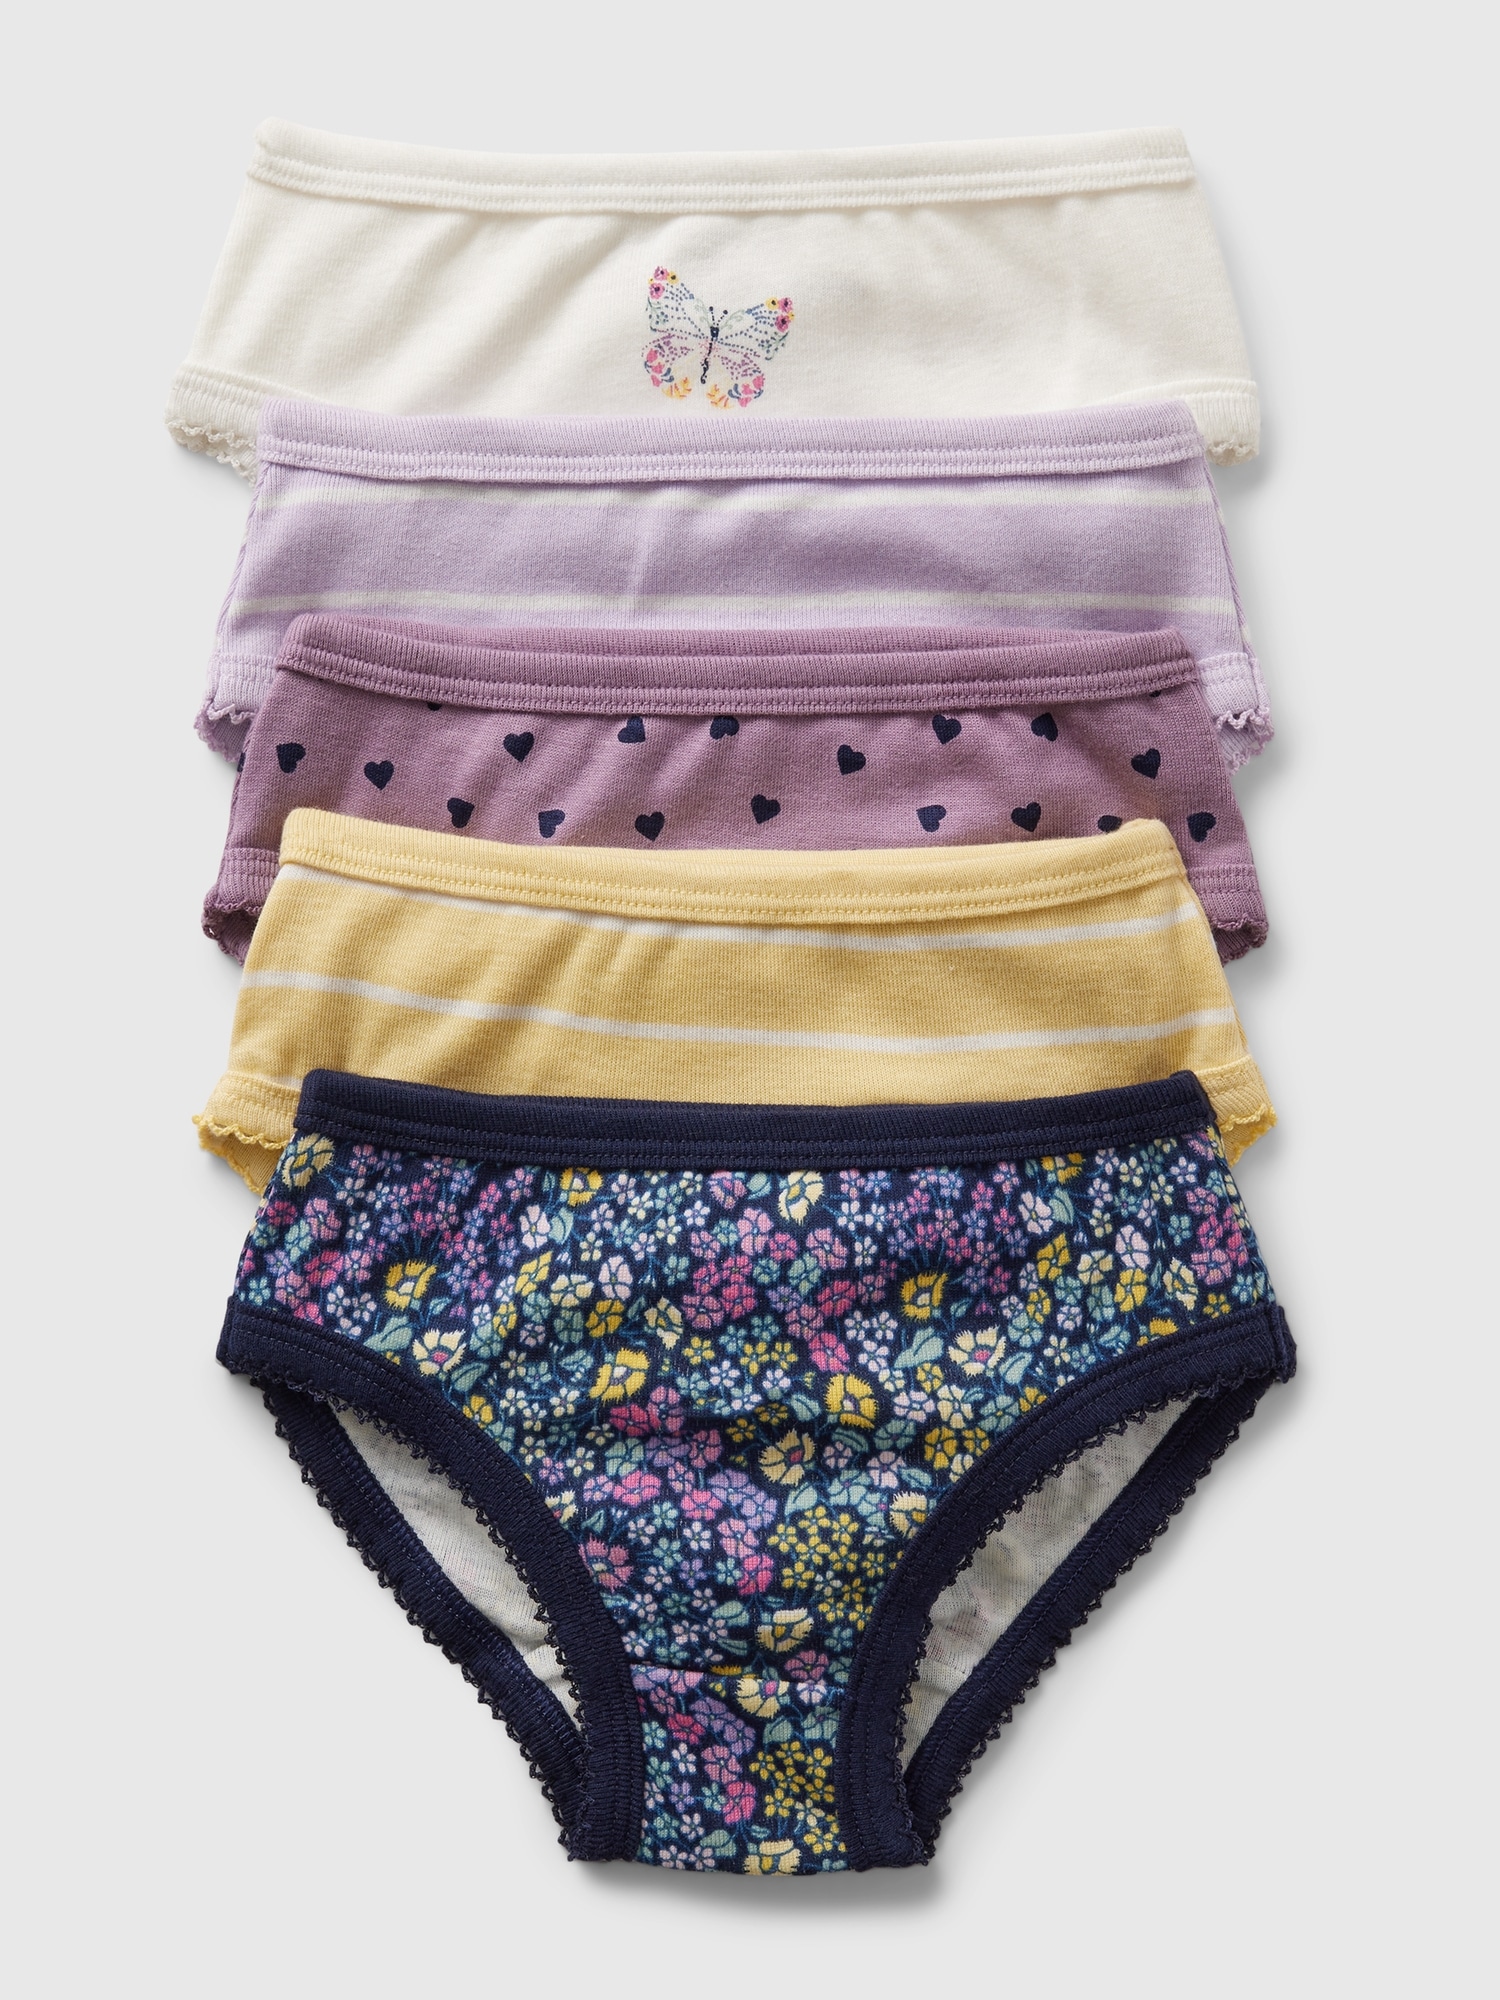 GAP unisex baby Briefs Bikini Style Underwear, Multi, 2-3T US at